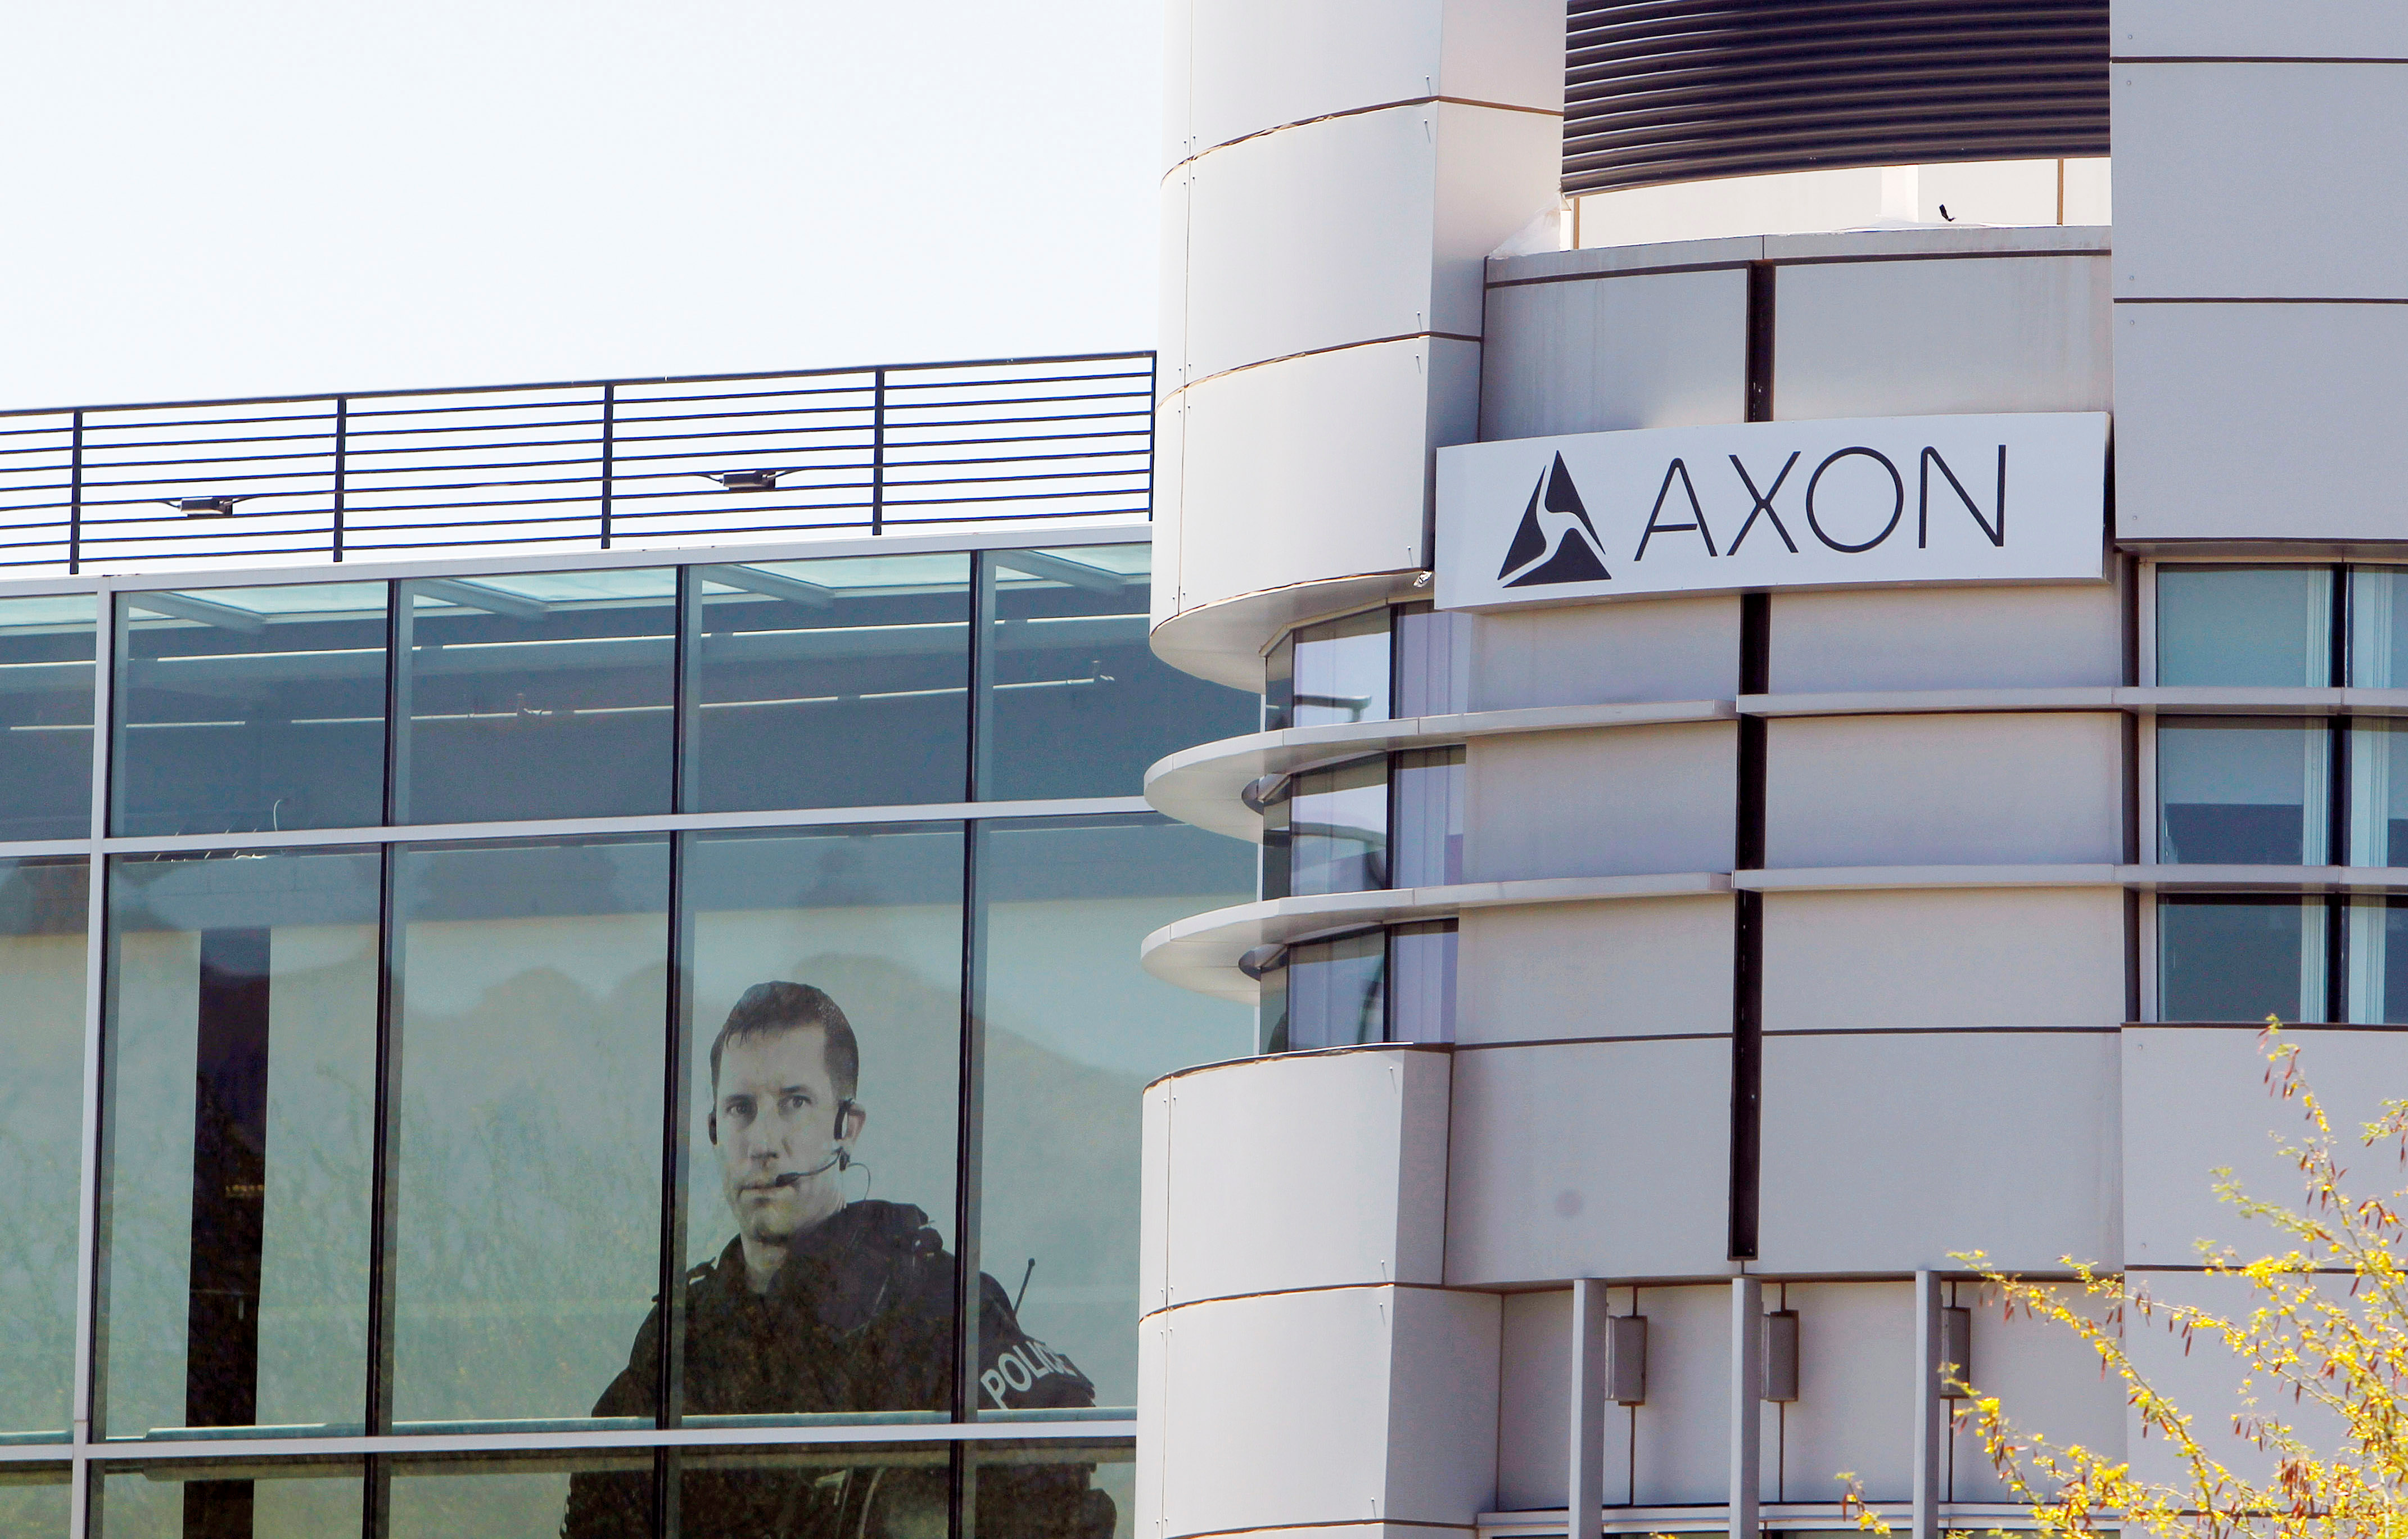 The headquarters for Axon Enterprise Inc, formerly Taser International, is seen in Scottsdale